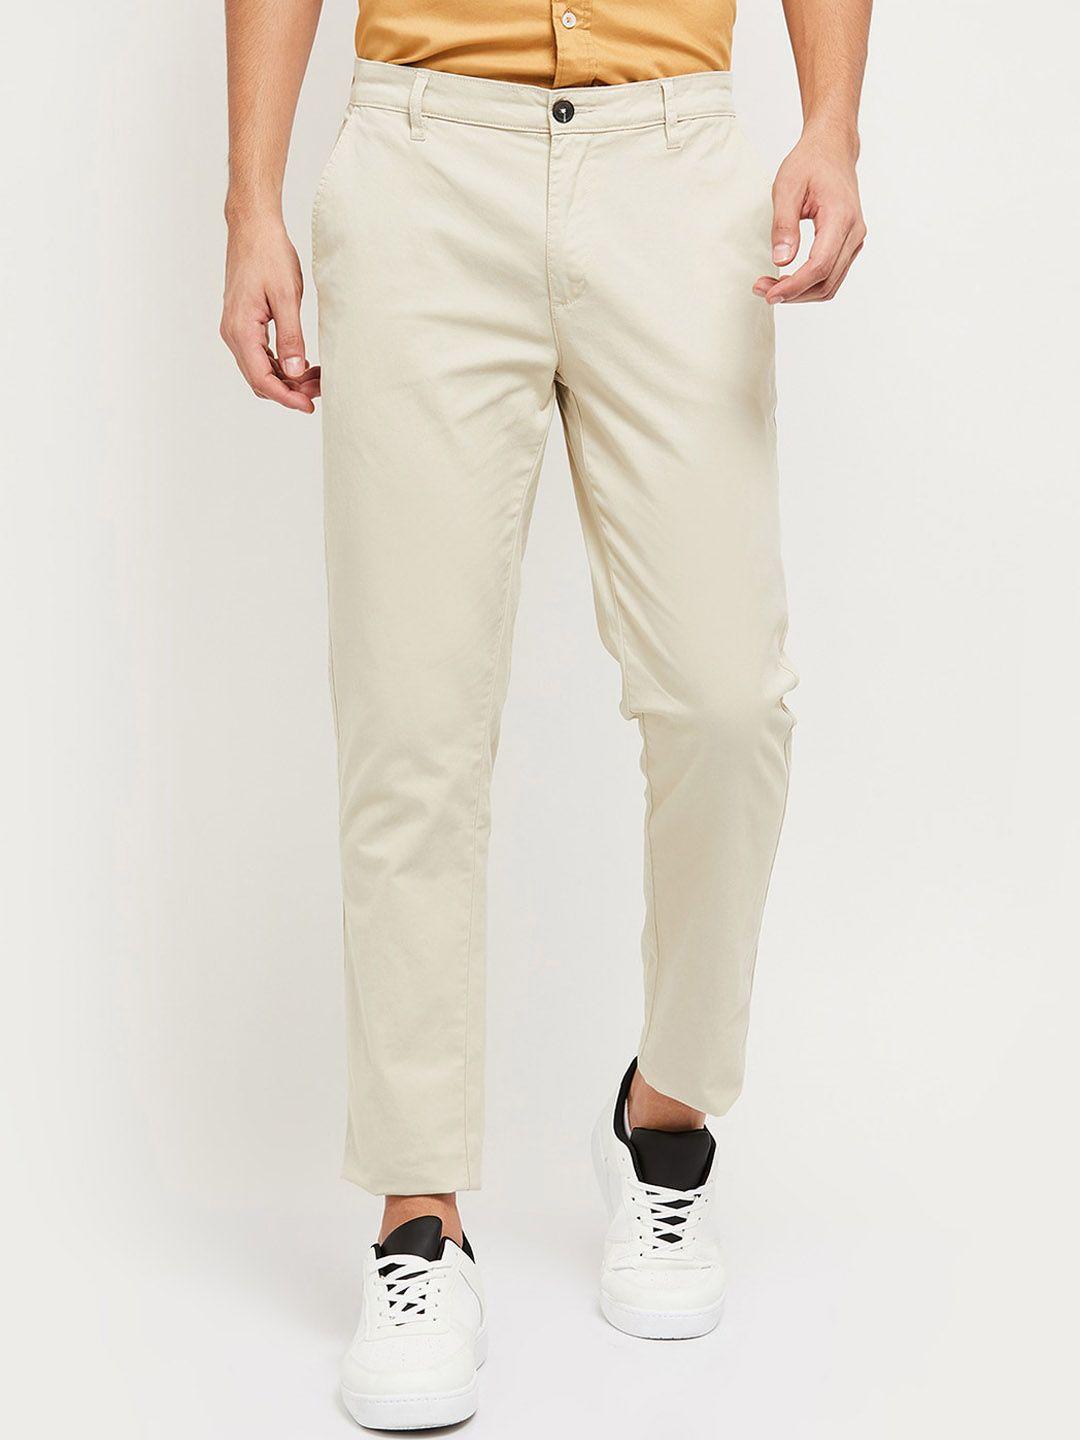 max-men-beige-trousers